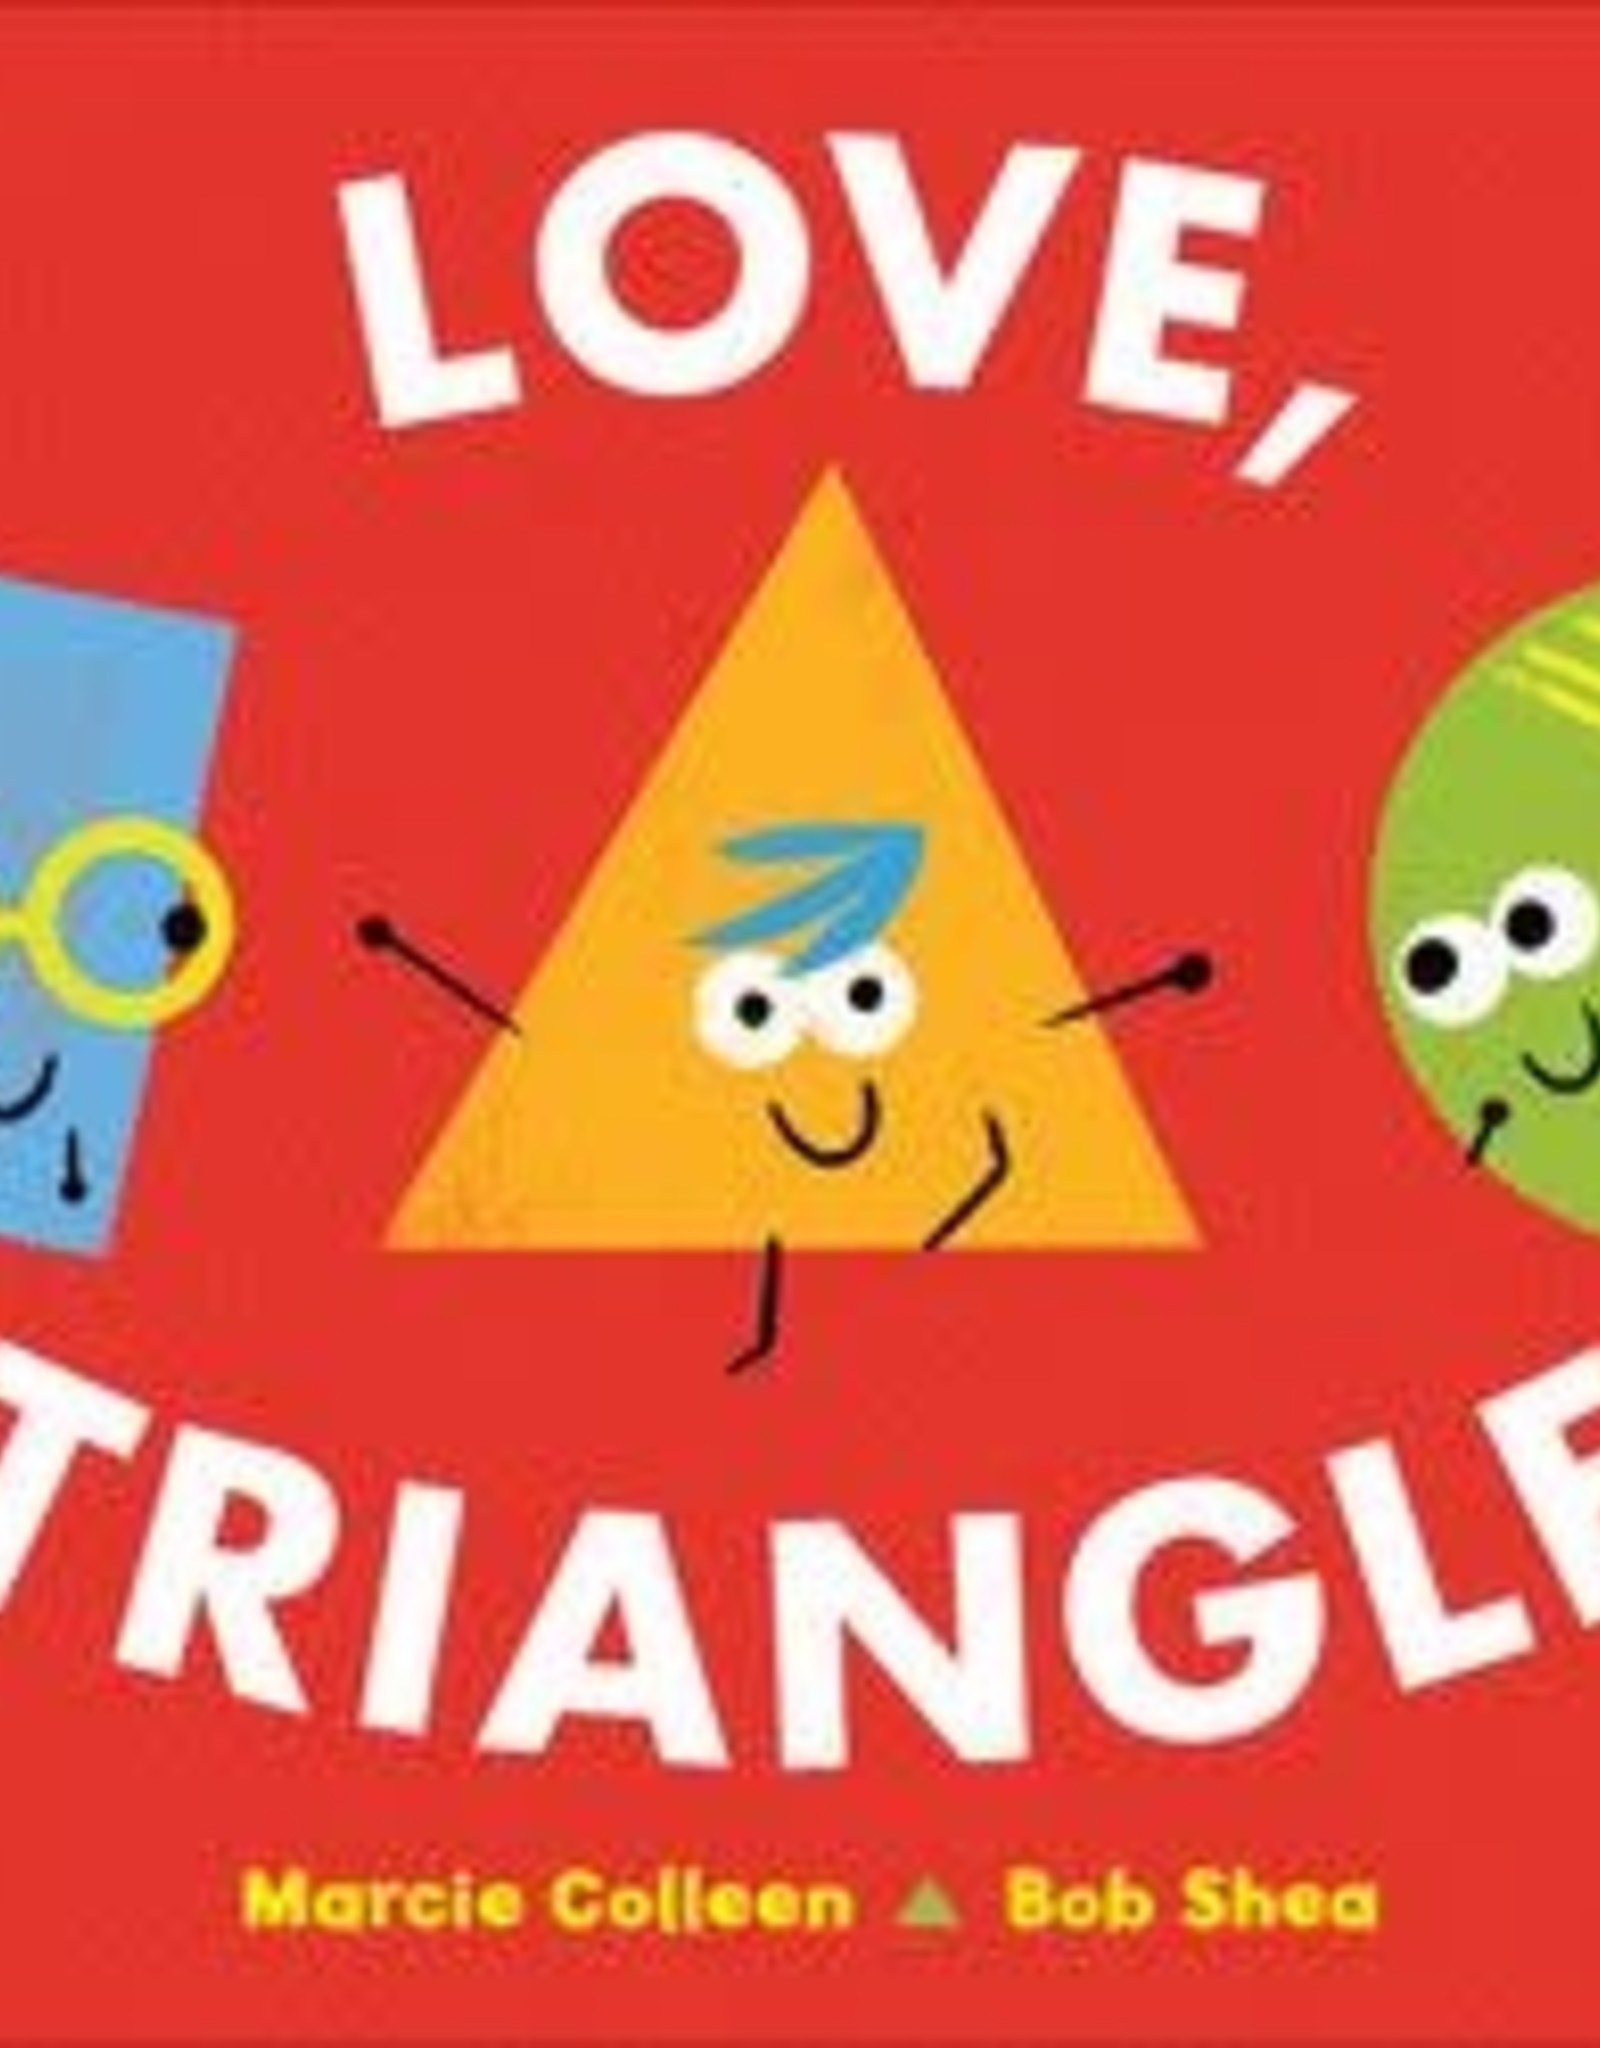 Love, Triangle